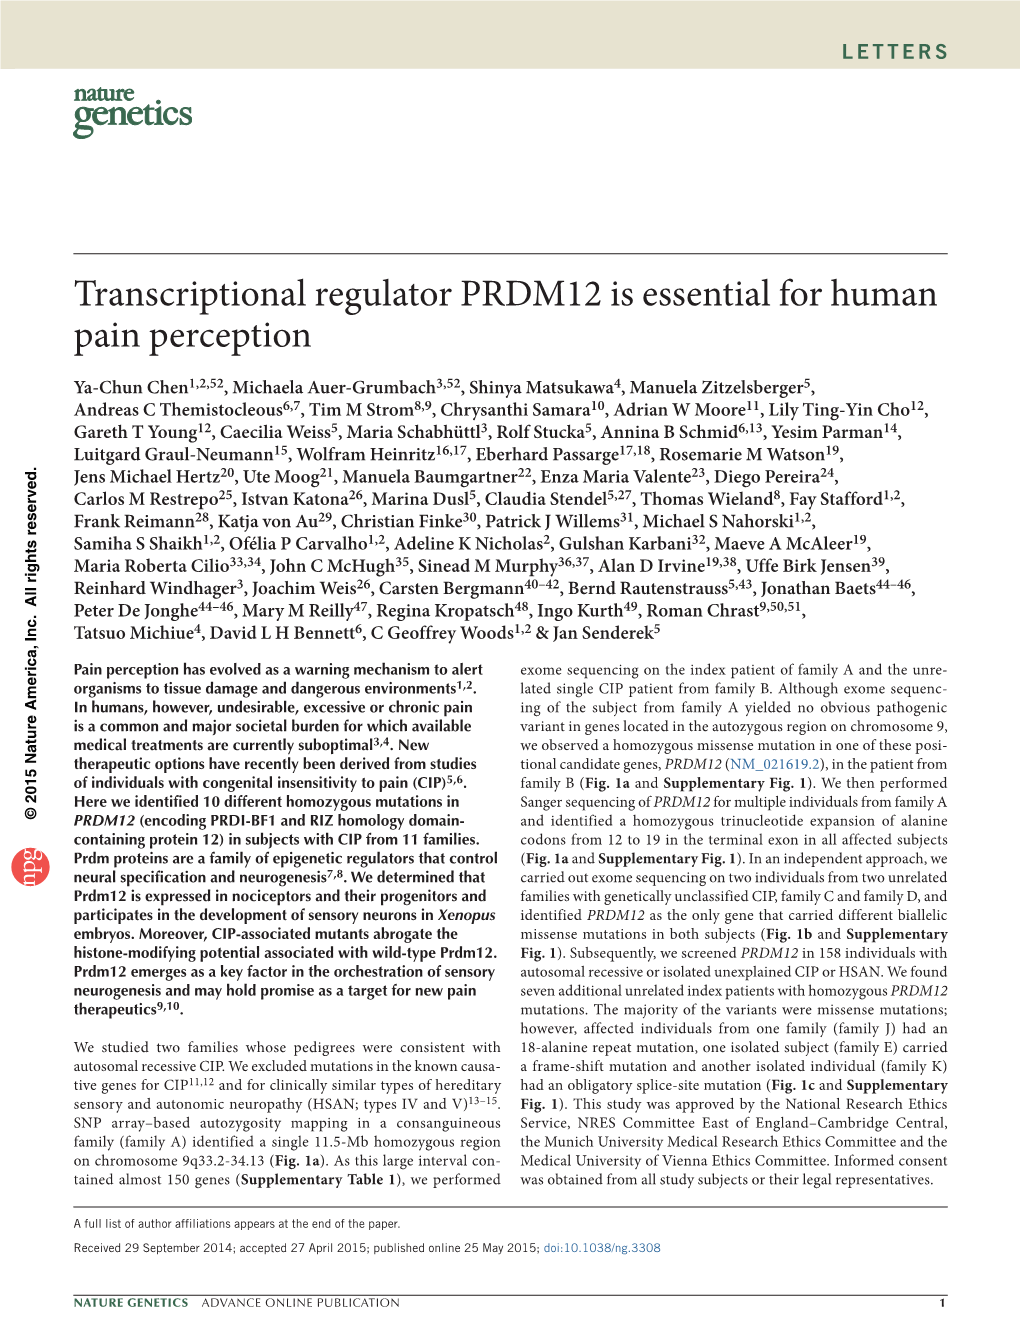 Transcriptional Regulator PRDM12 Is Essential for Human Pain